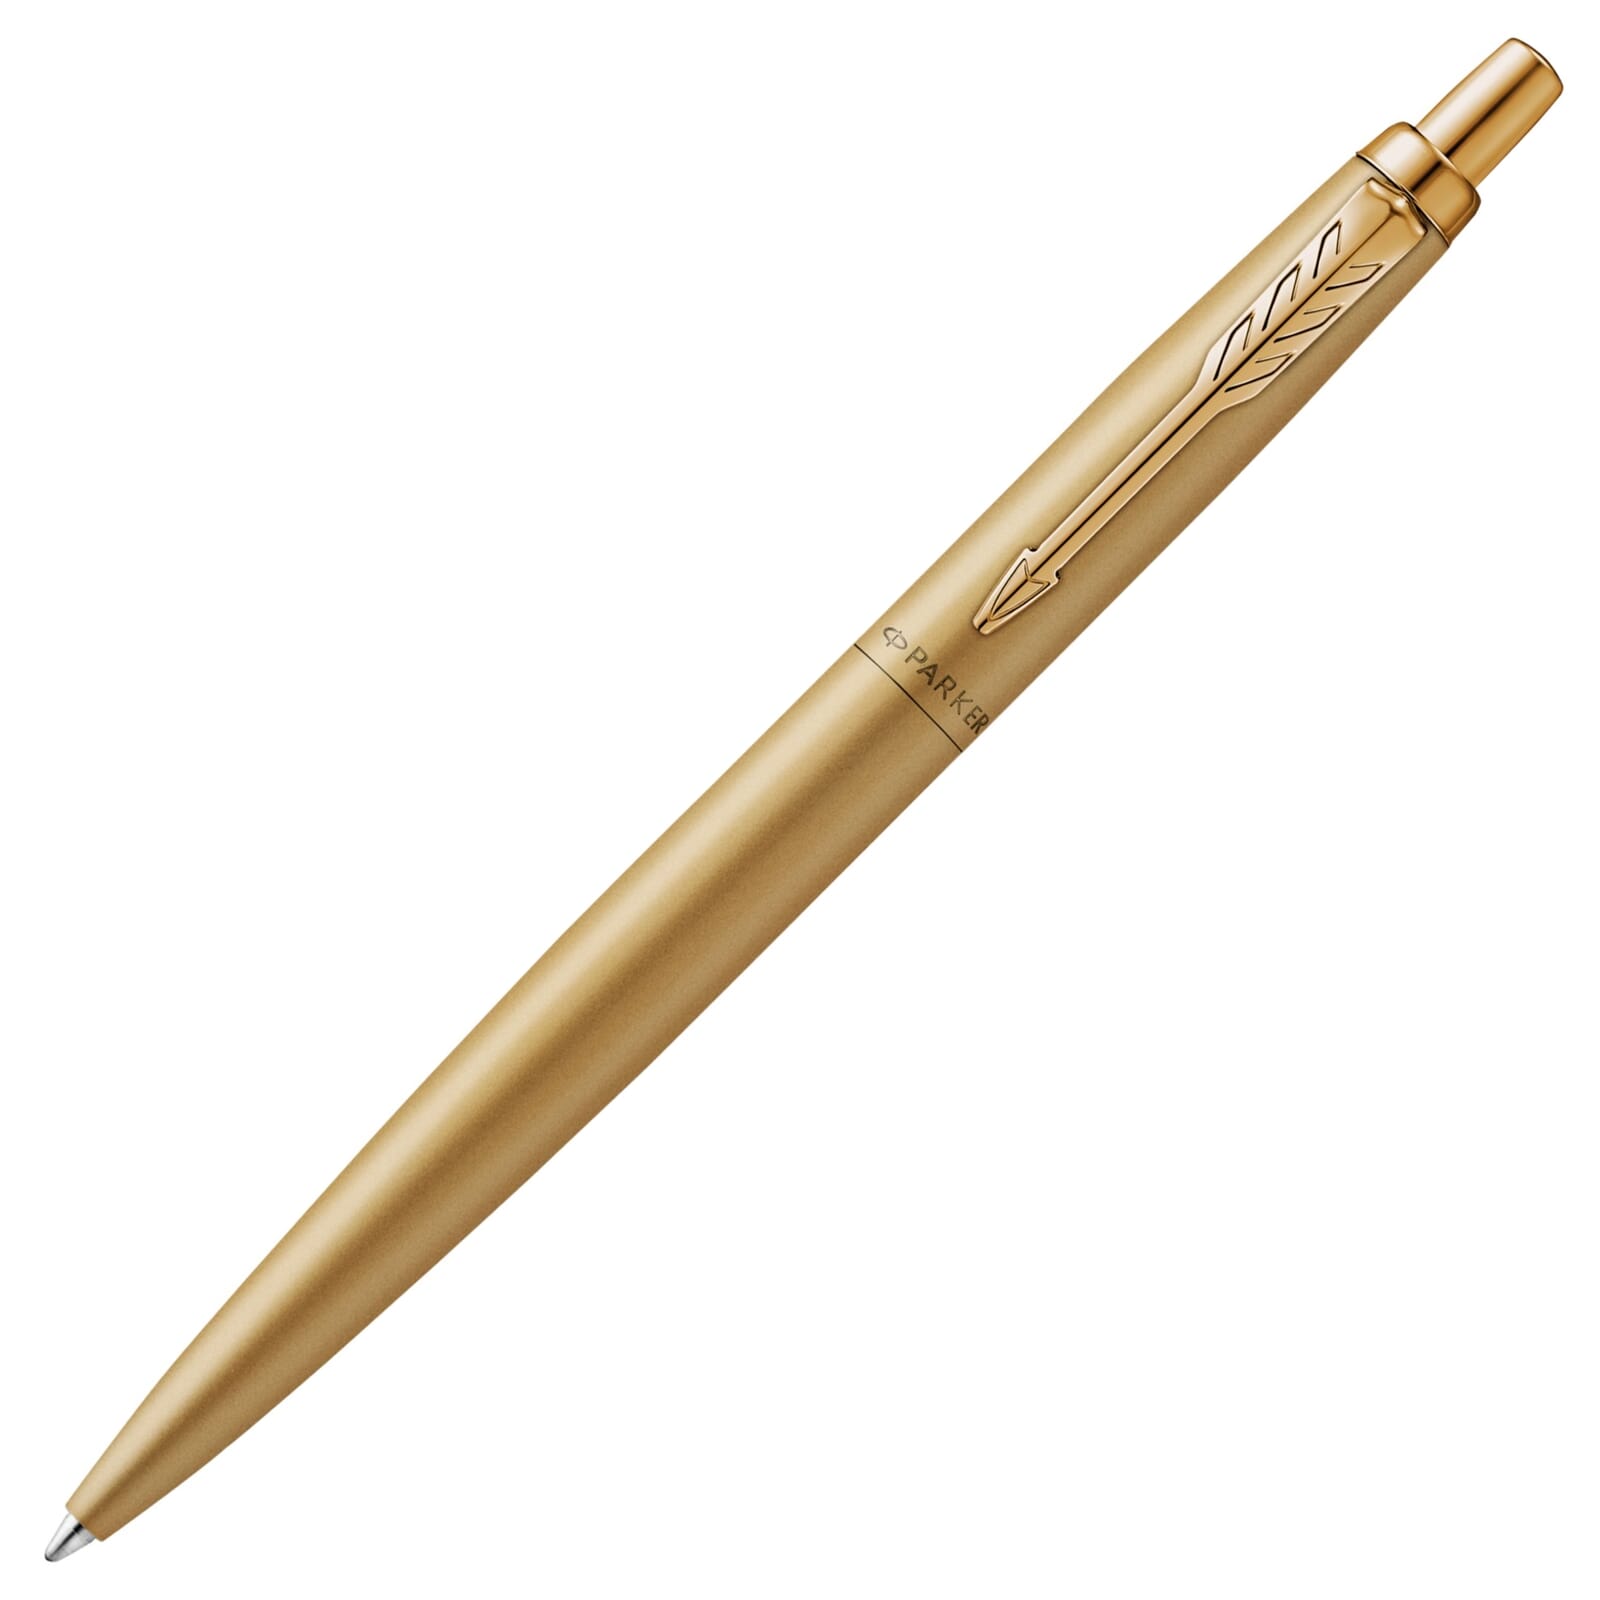 Parker Jotter XL Ballpoint Pen - Monochrome Gold